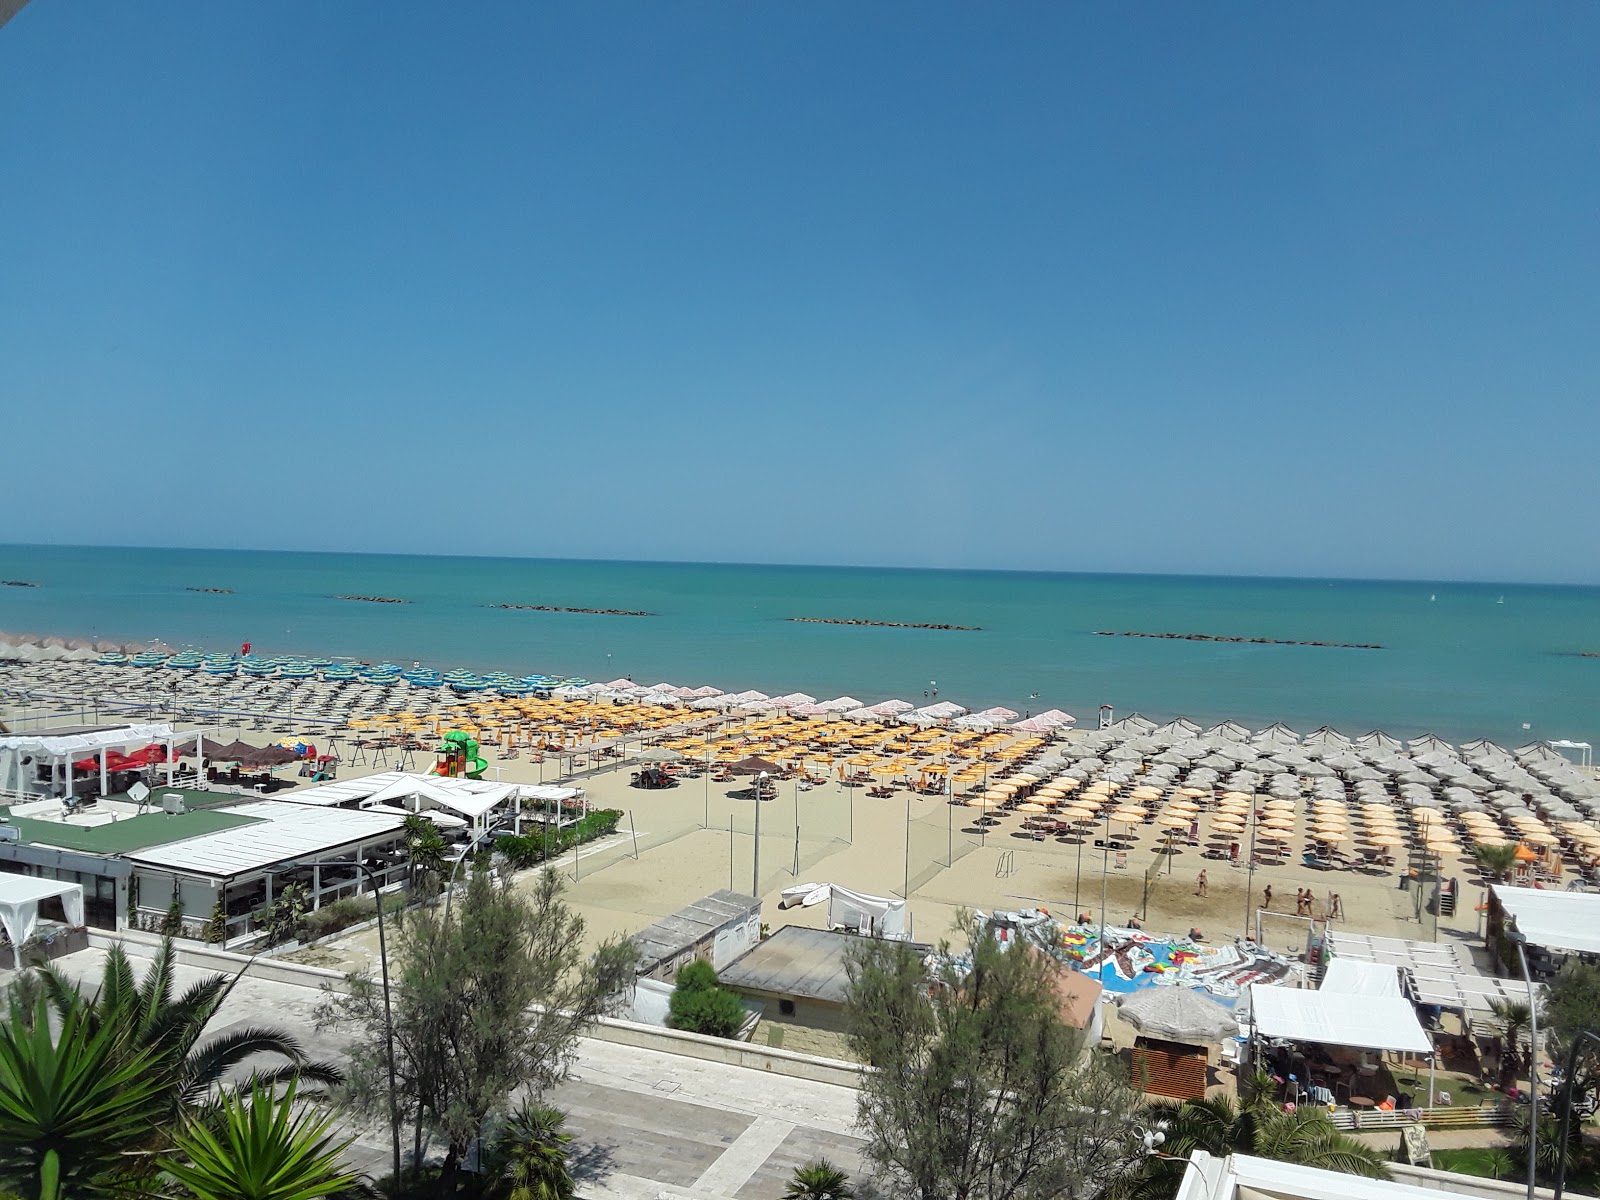 Foto af Spiaggia di Pescara med lys fint sand overflade